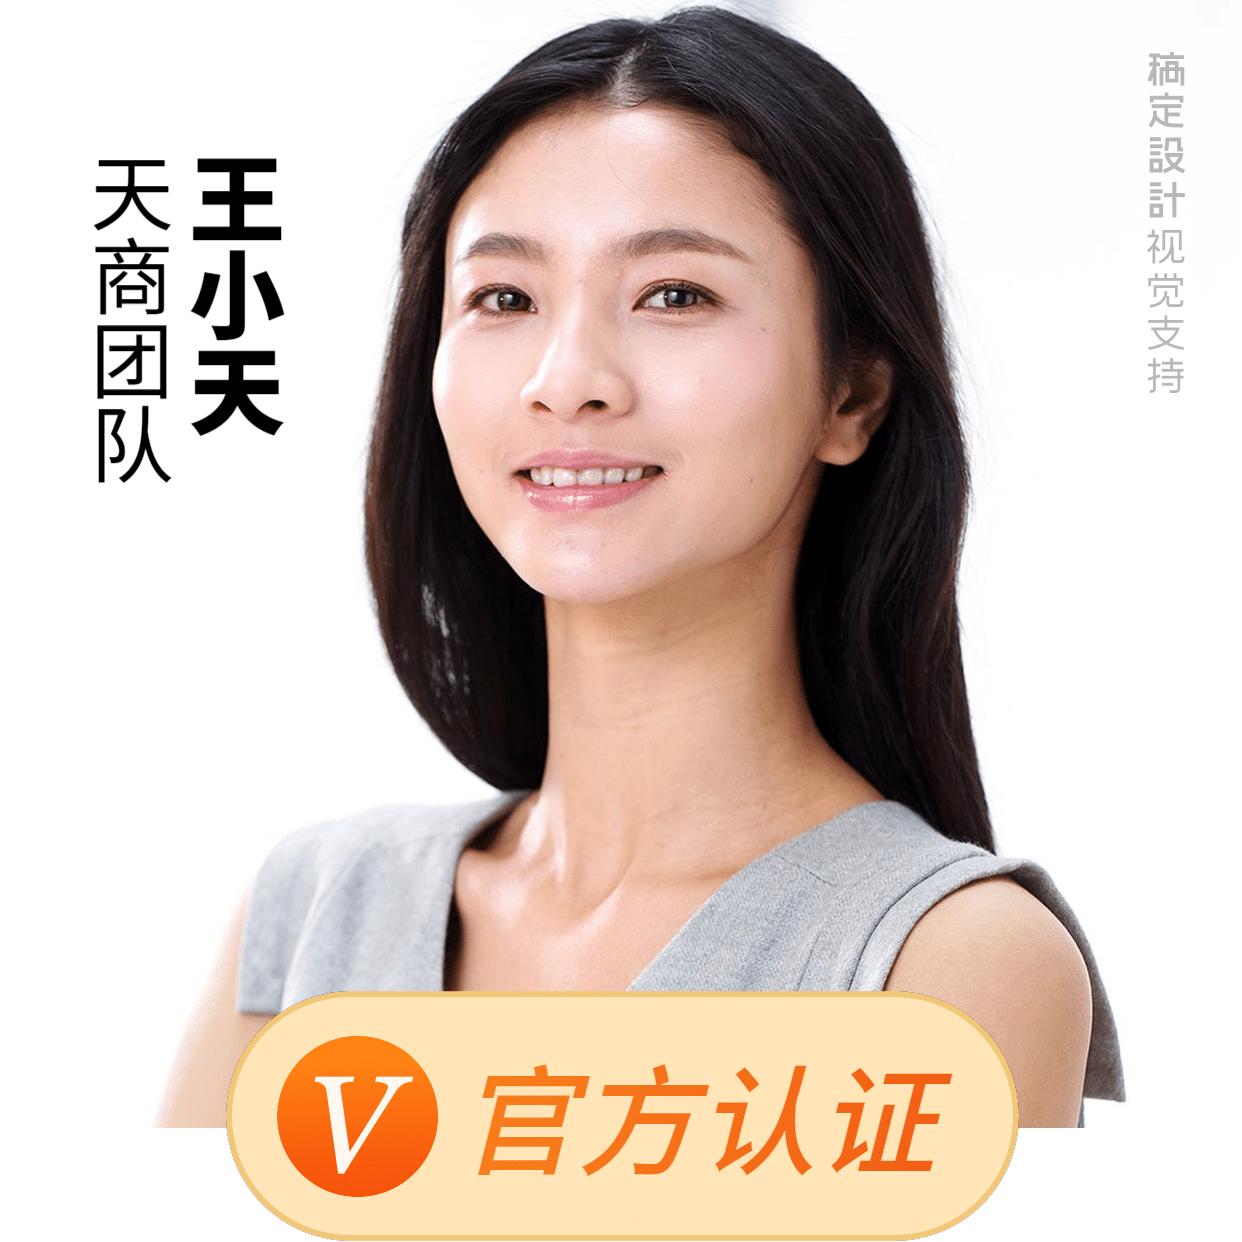 美女手机背景壁纸Free Asian Beauty Mobile Wallpaper